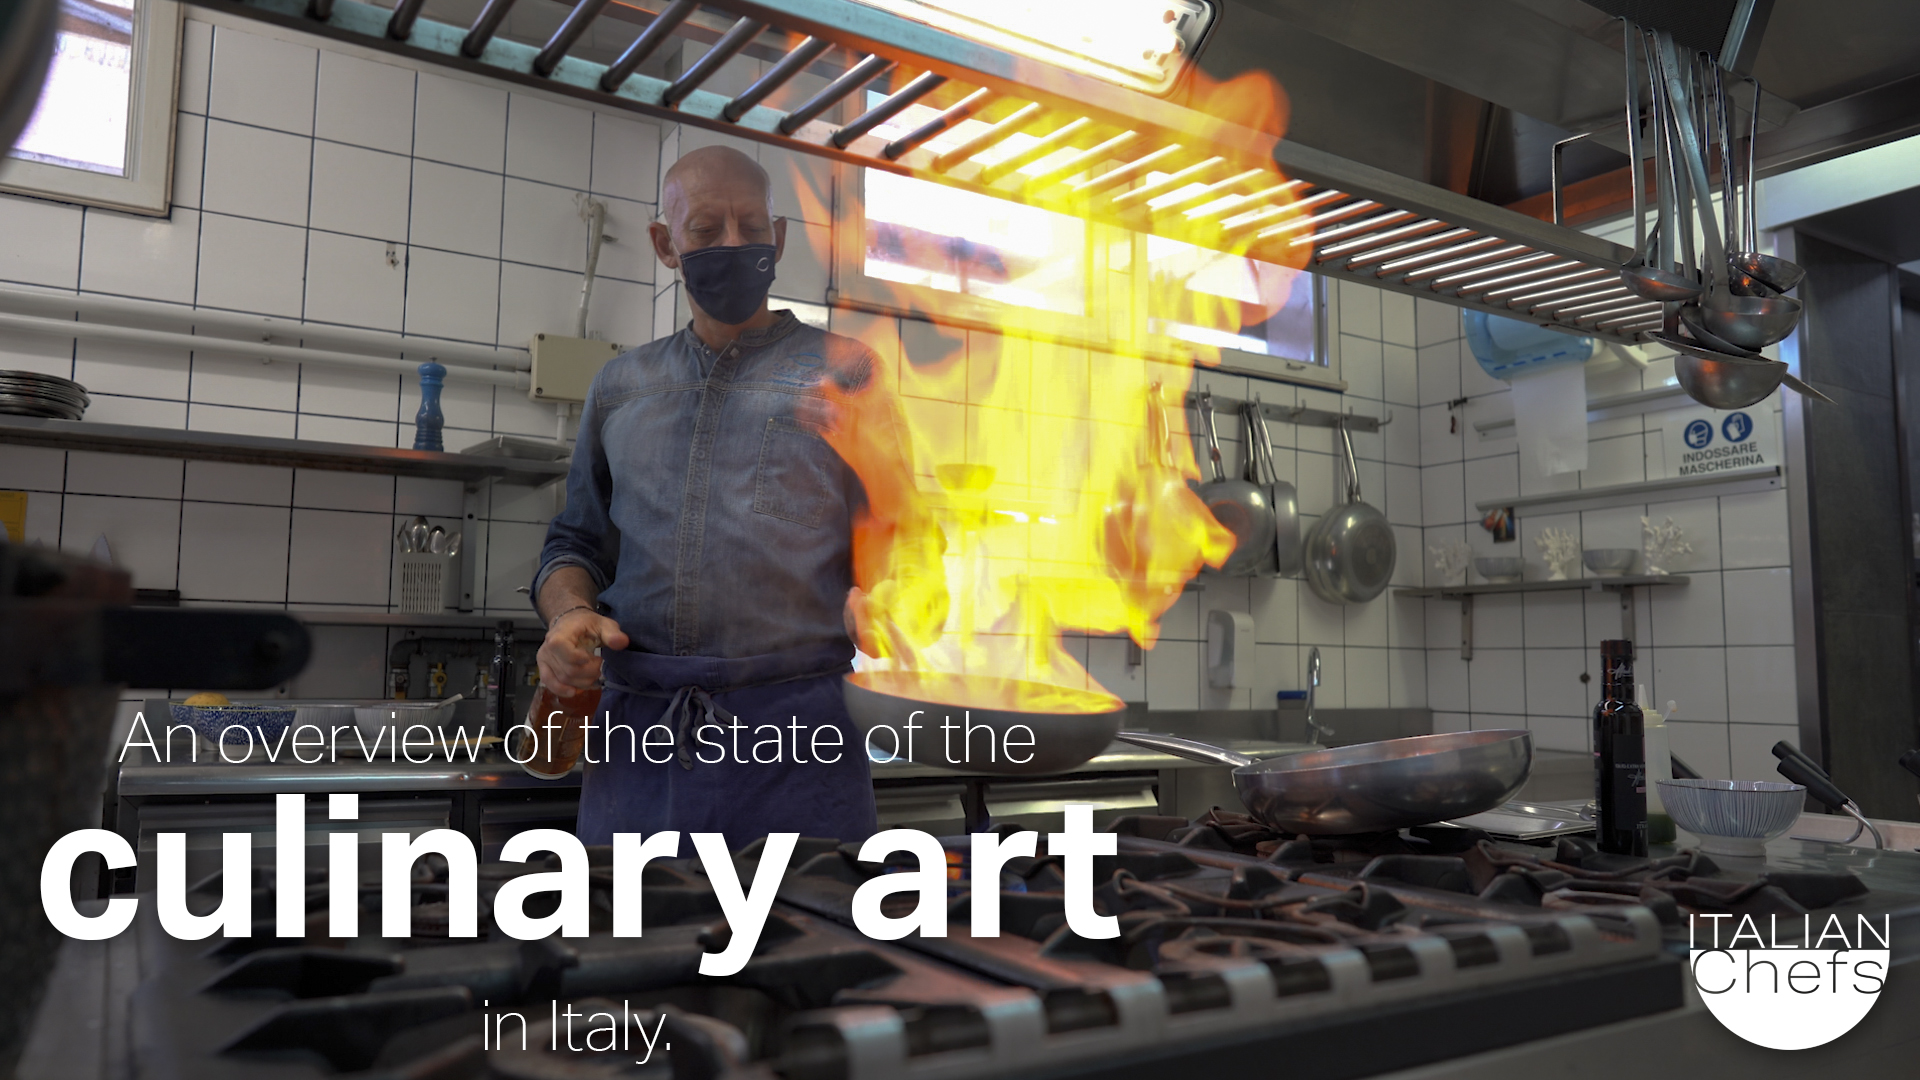 Documentary series Italian Chefs - Culinary art